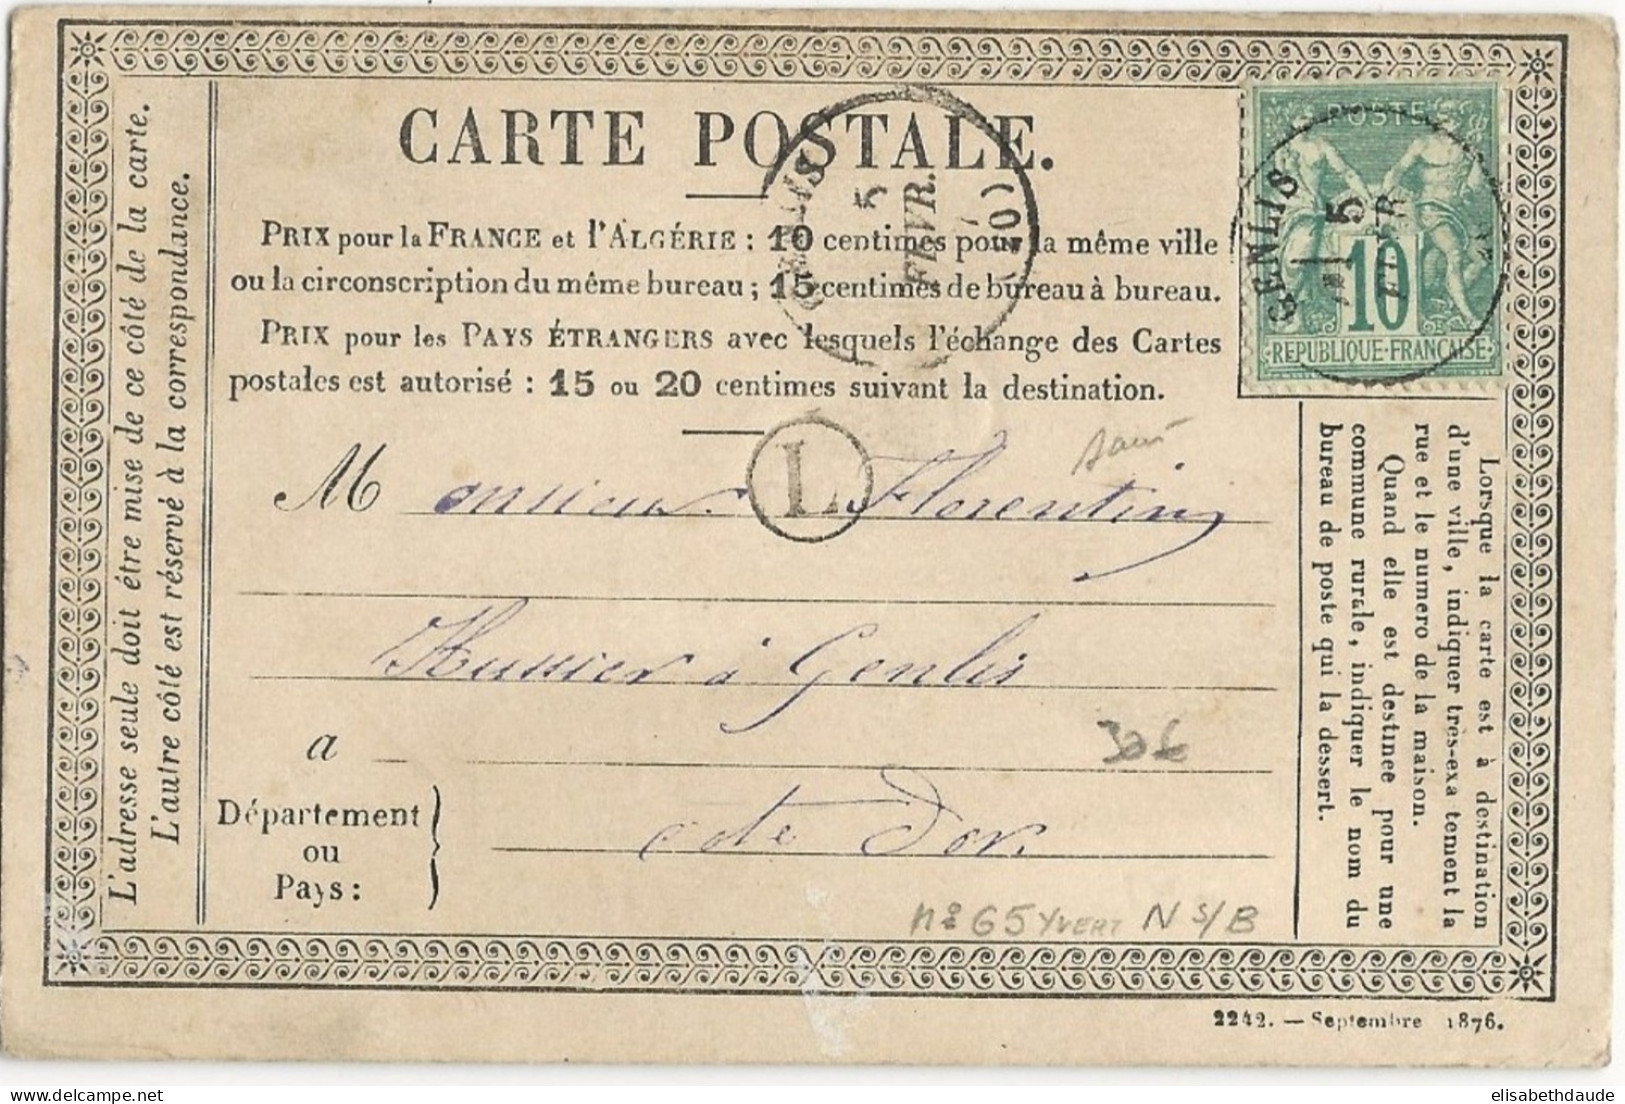 1877 - SAGE 10c N/B Sur CARTE PRECURSEUR De GENLIS (COTE D'OR) - BOITE RURALE L NON IDENTIFIEE - Vorläufer